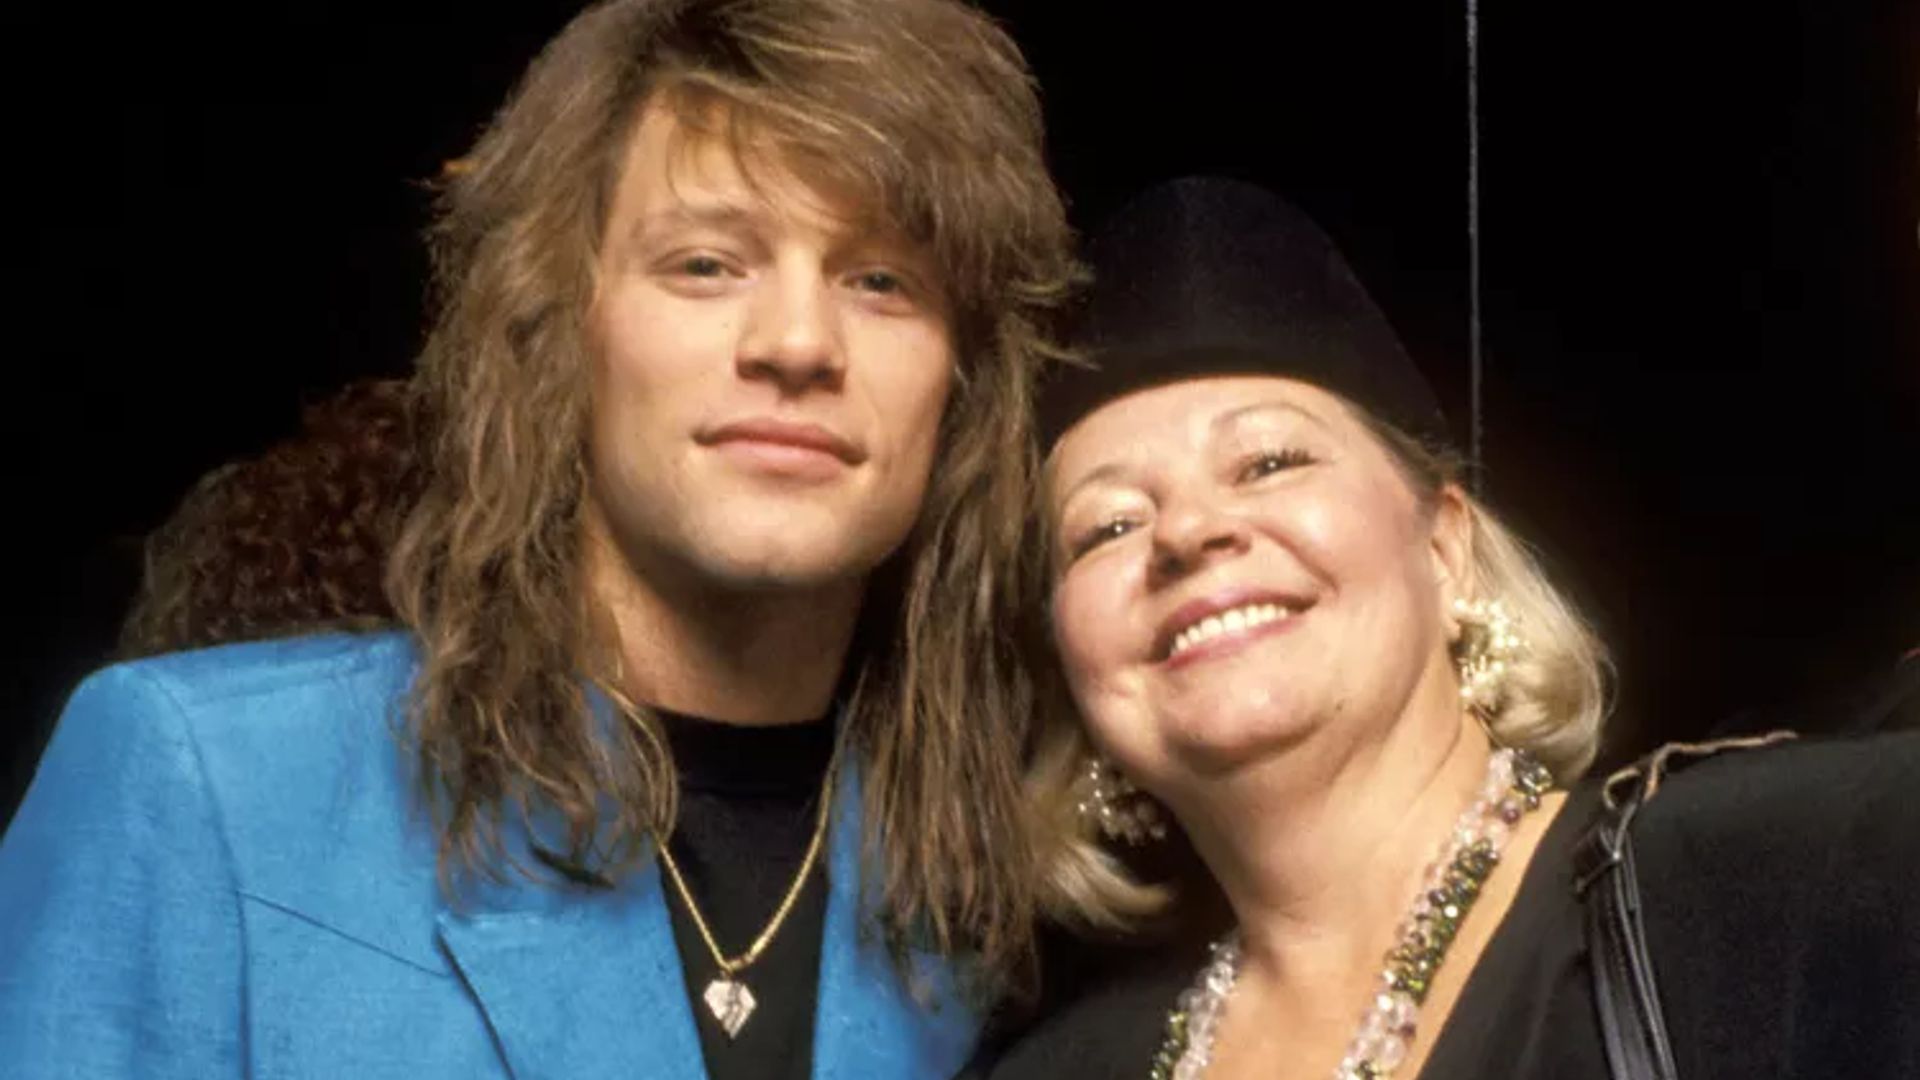 Jon with his mom Carol